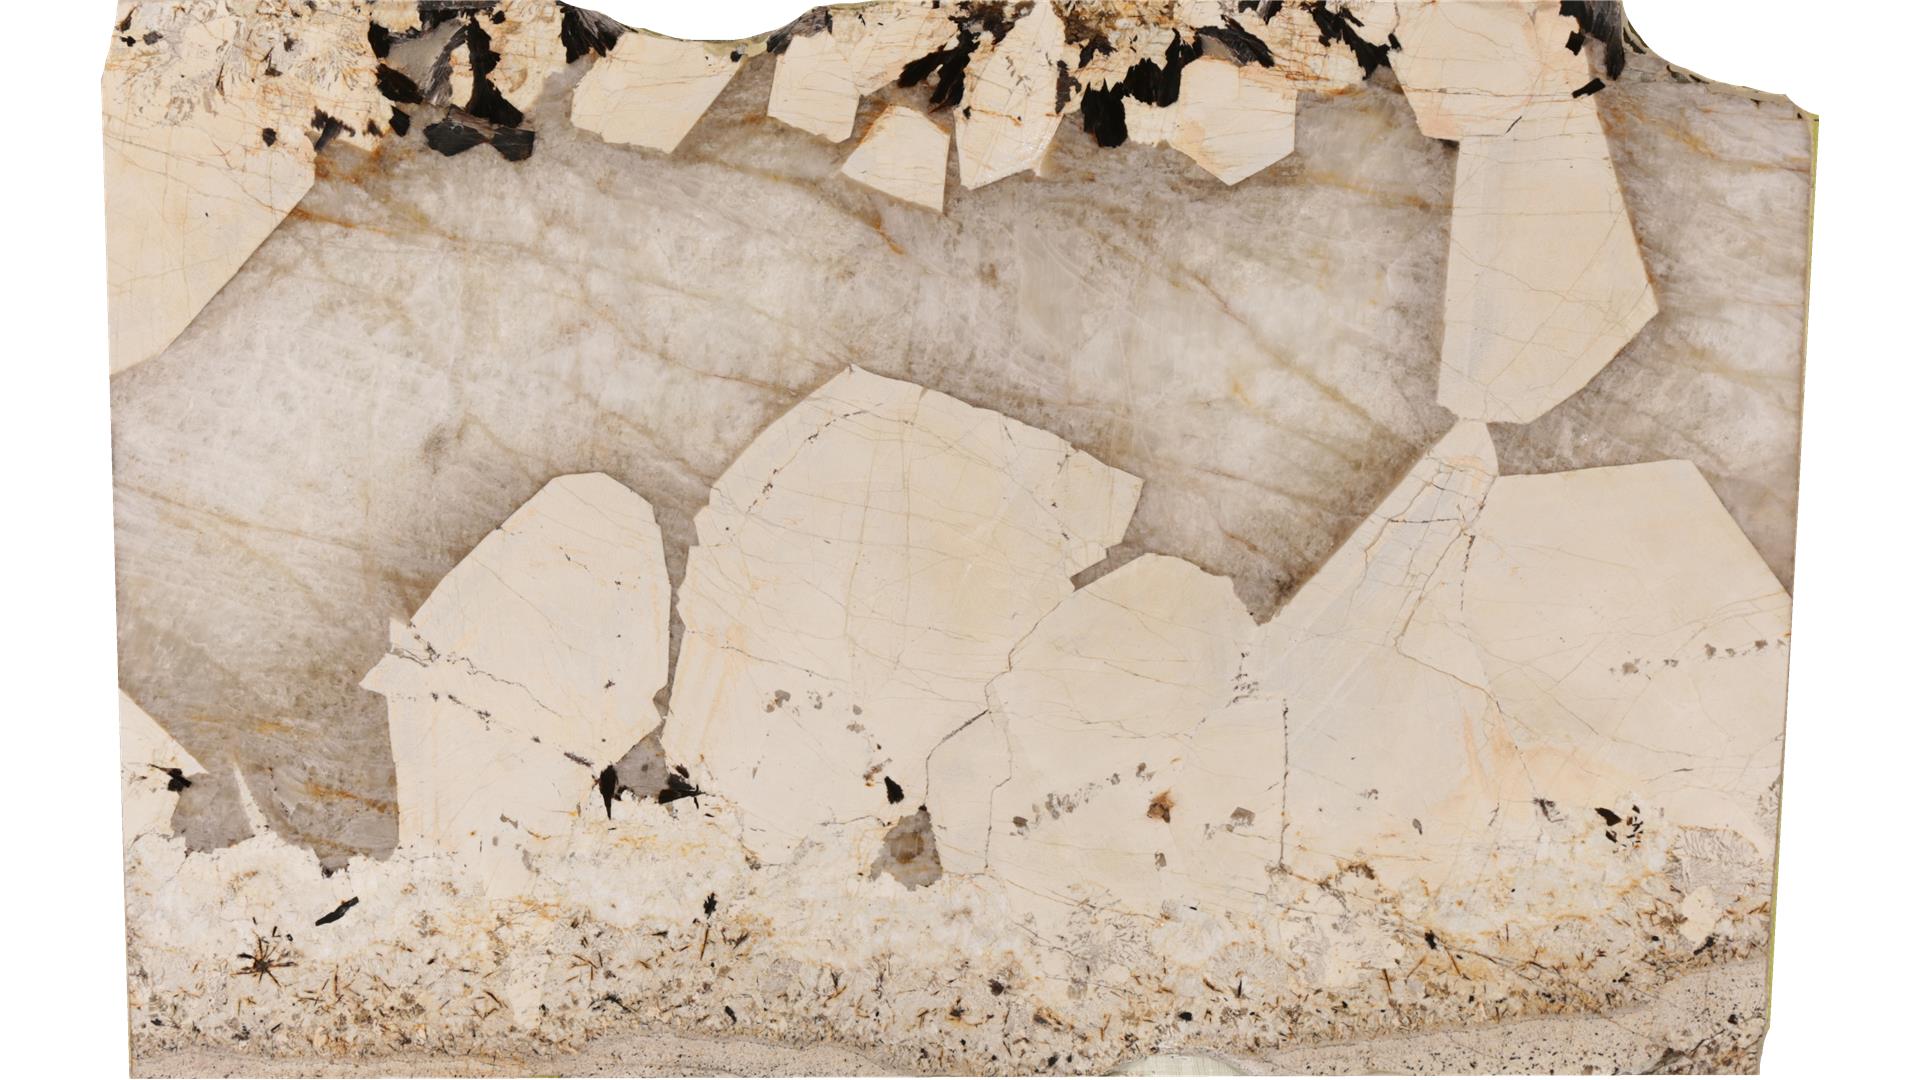 Patagonia (Gr) Granite Slabs